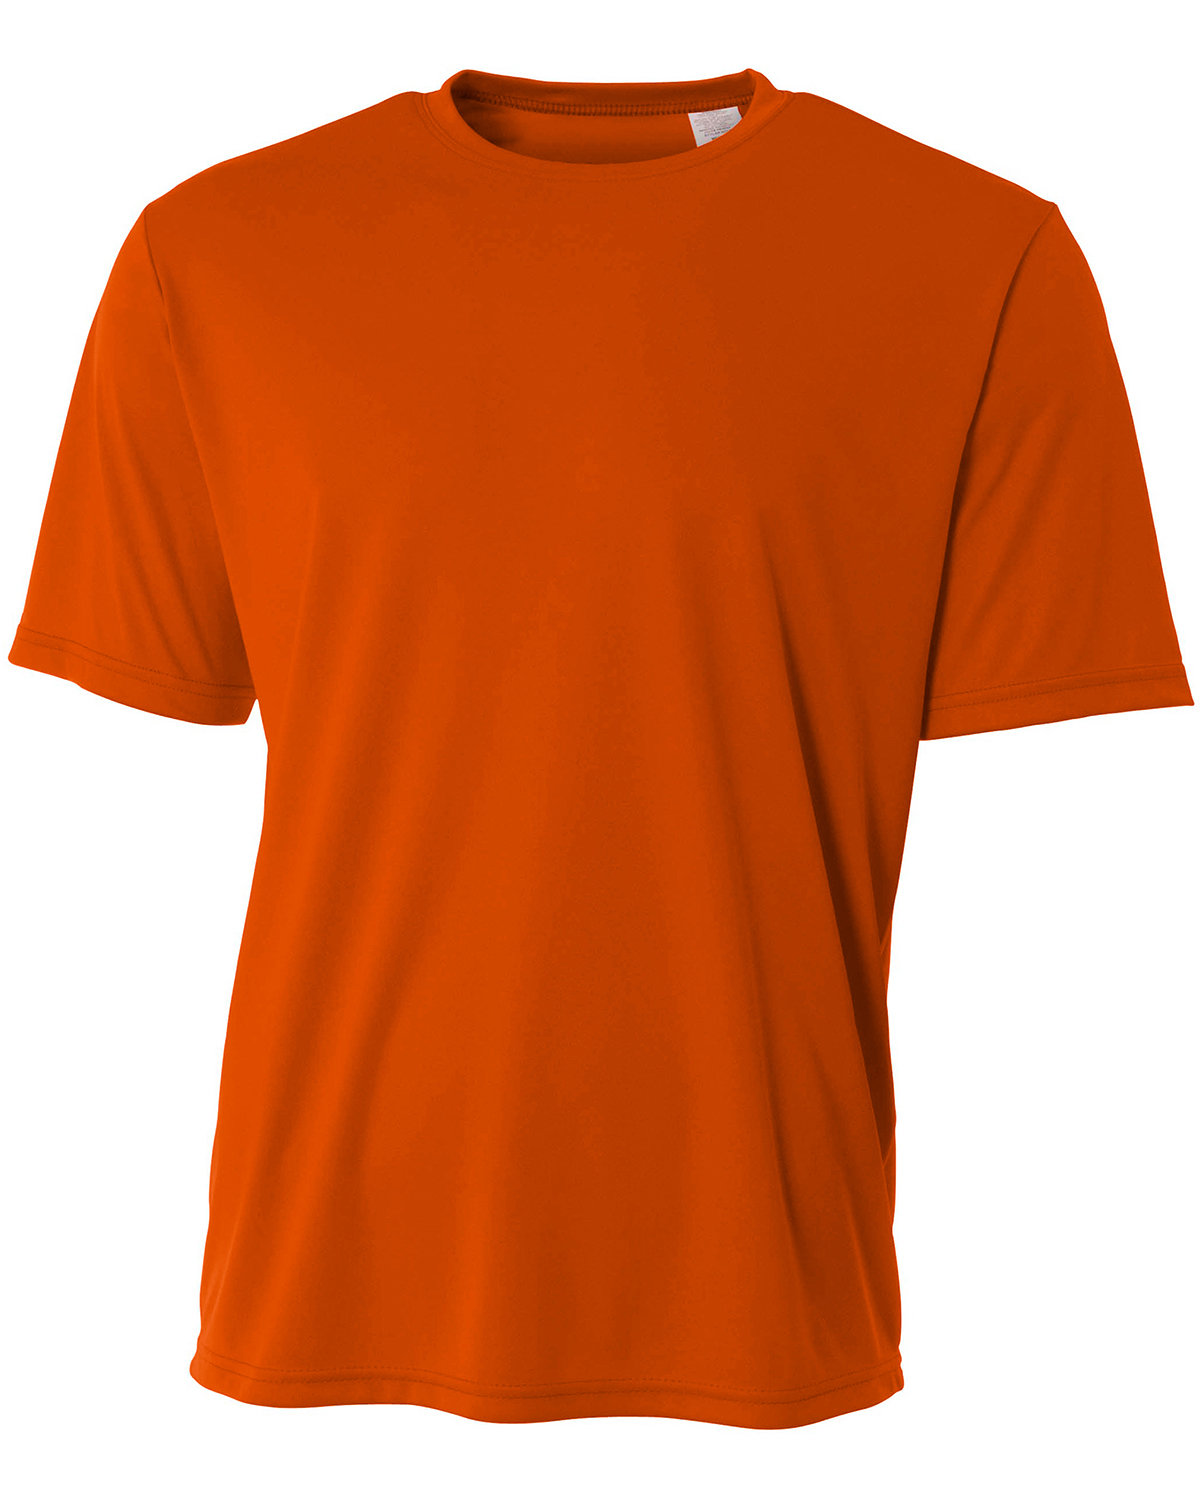 A4 Men's Sprint Performance T-Shirt ATHLETIC ORANGE 